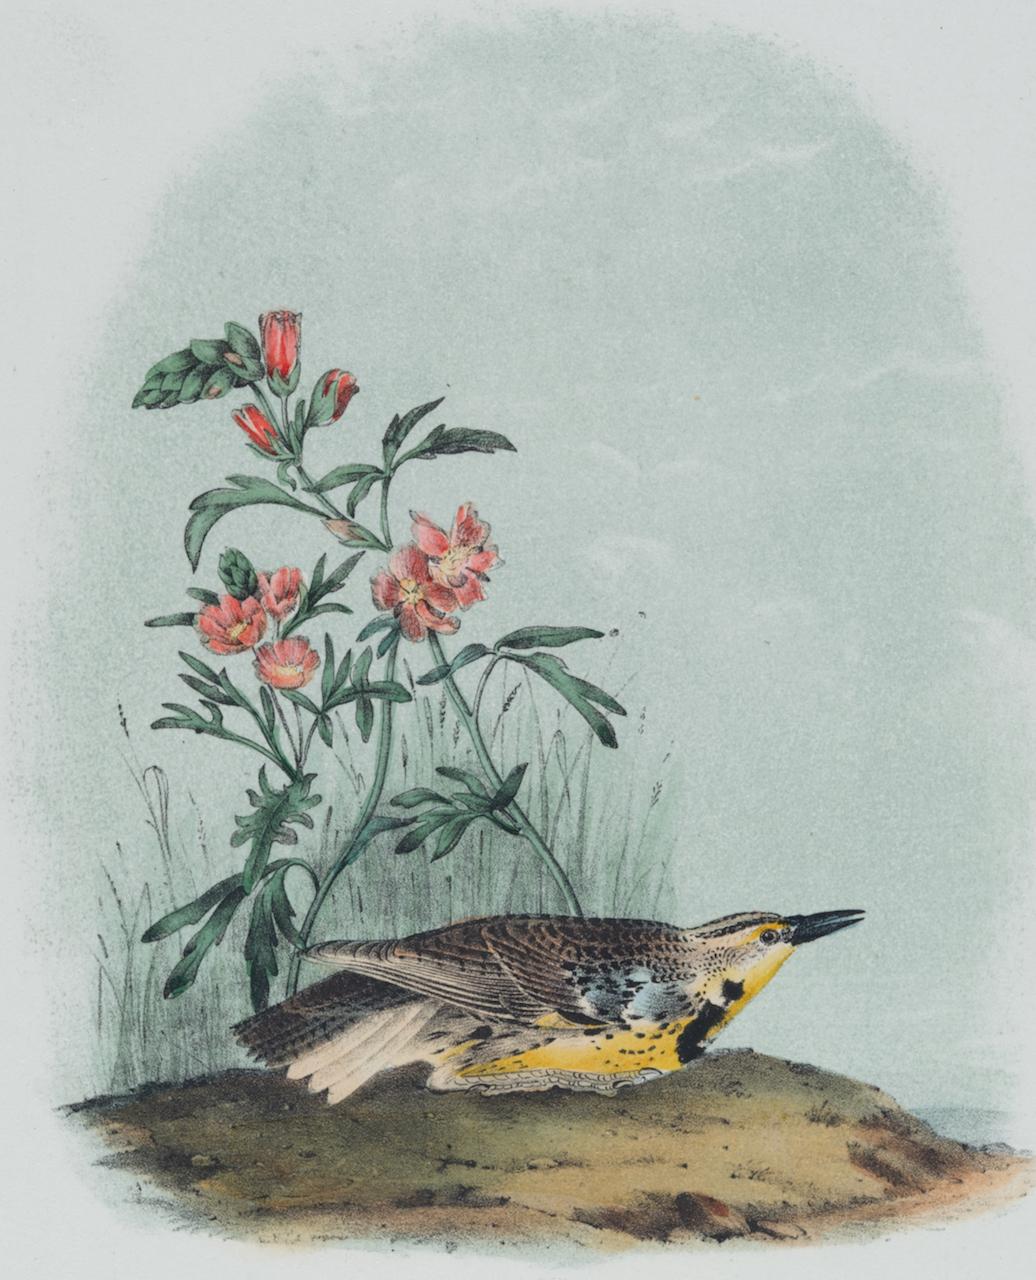 Missouri Meadow Lark: An Original 19th C. Audubon Hand-colored Bird Lithograph  - Print by John James Audubon